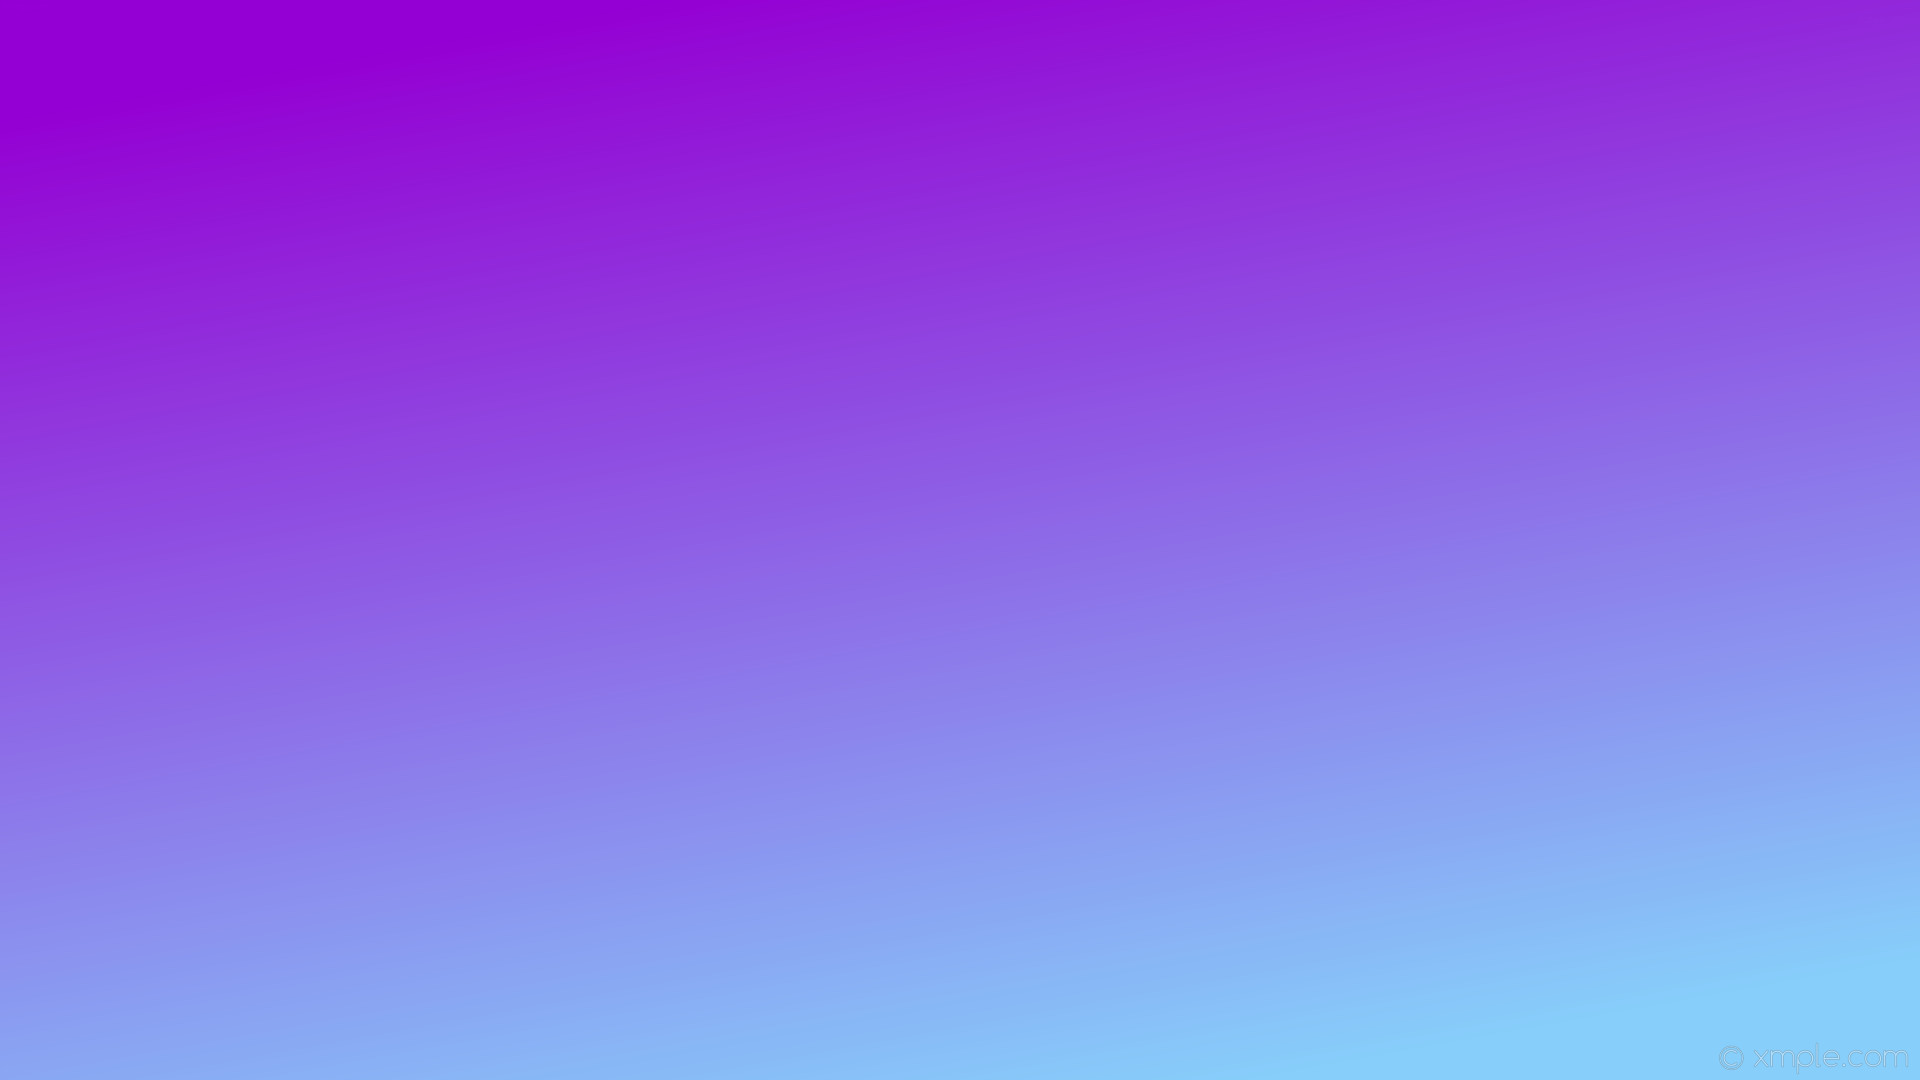 1920x1080 wallpaper gradient purple blue linear dark violet light sky blue #9400d3  #87cefa 120Â°